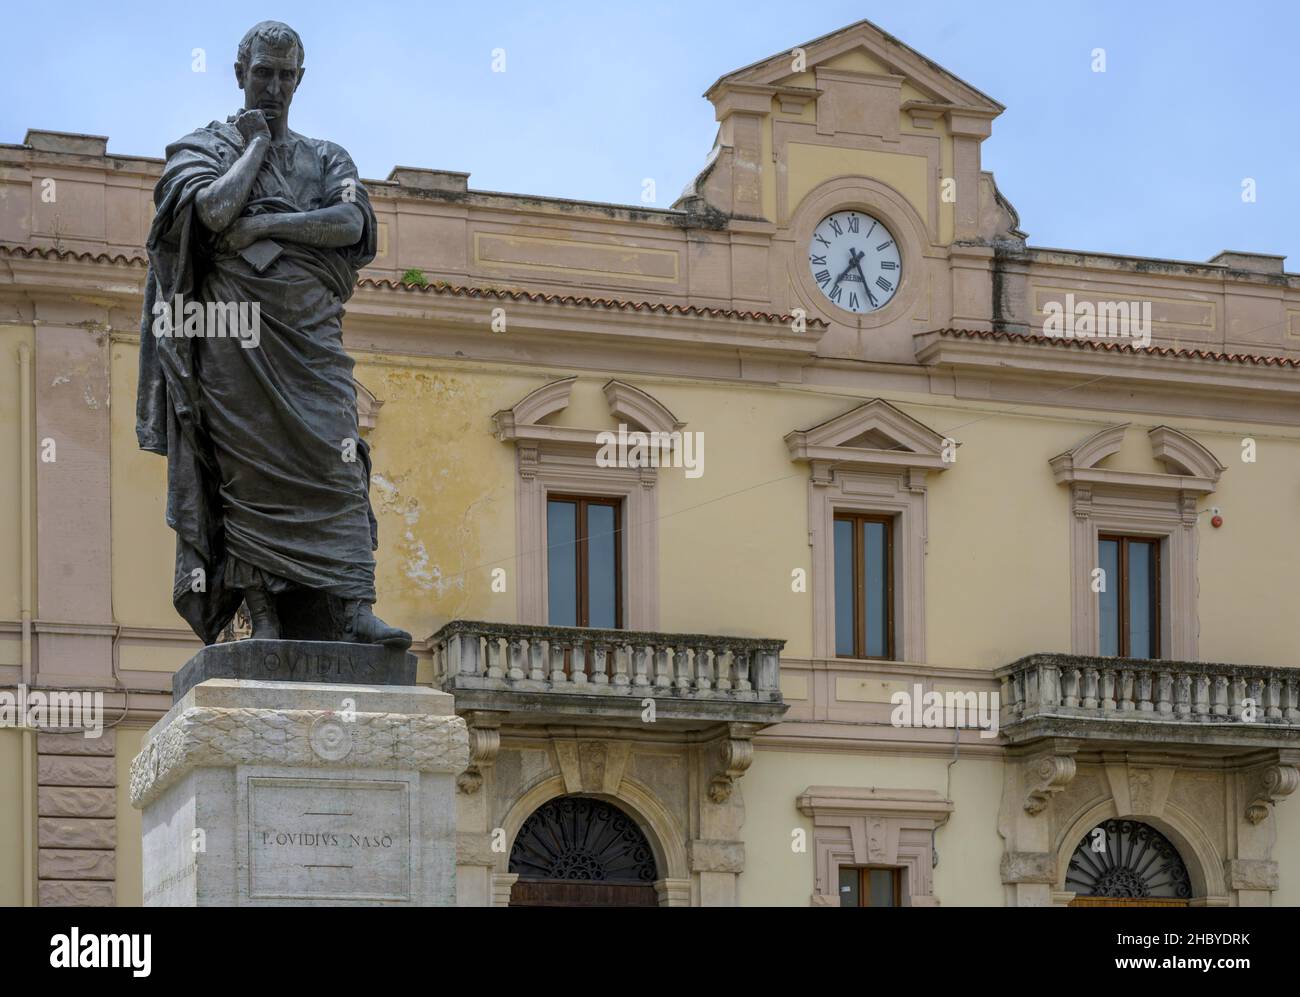 Statue of Ovid, Sulmona, Province of L'Aquila, Italy Stock Photo